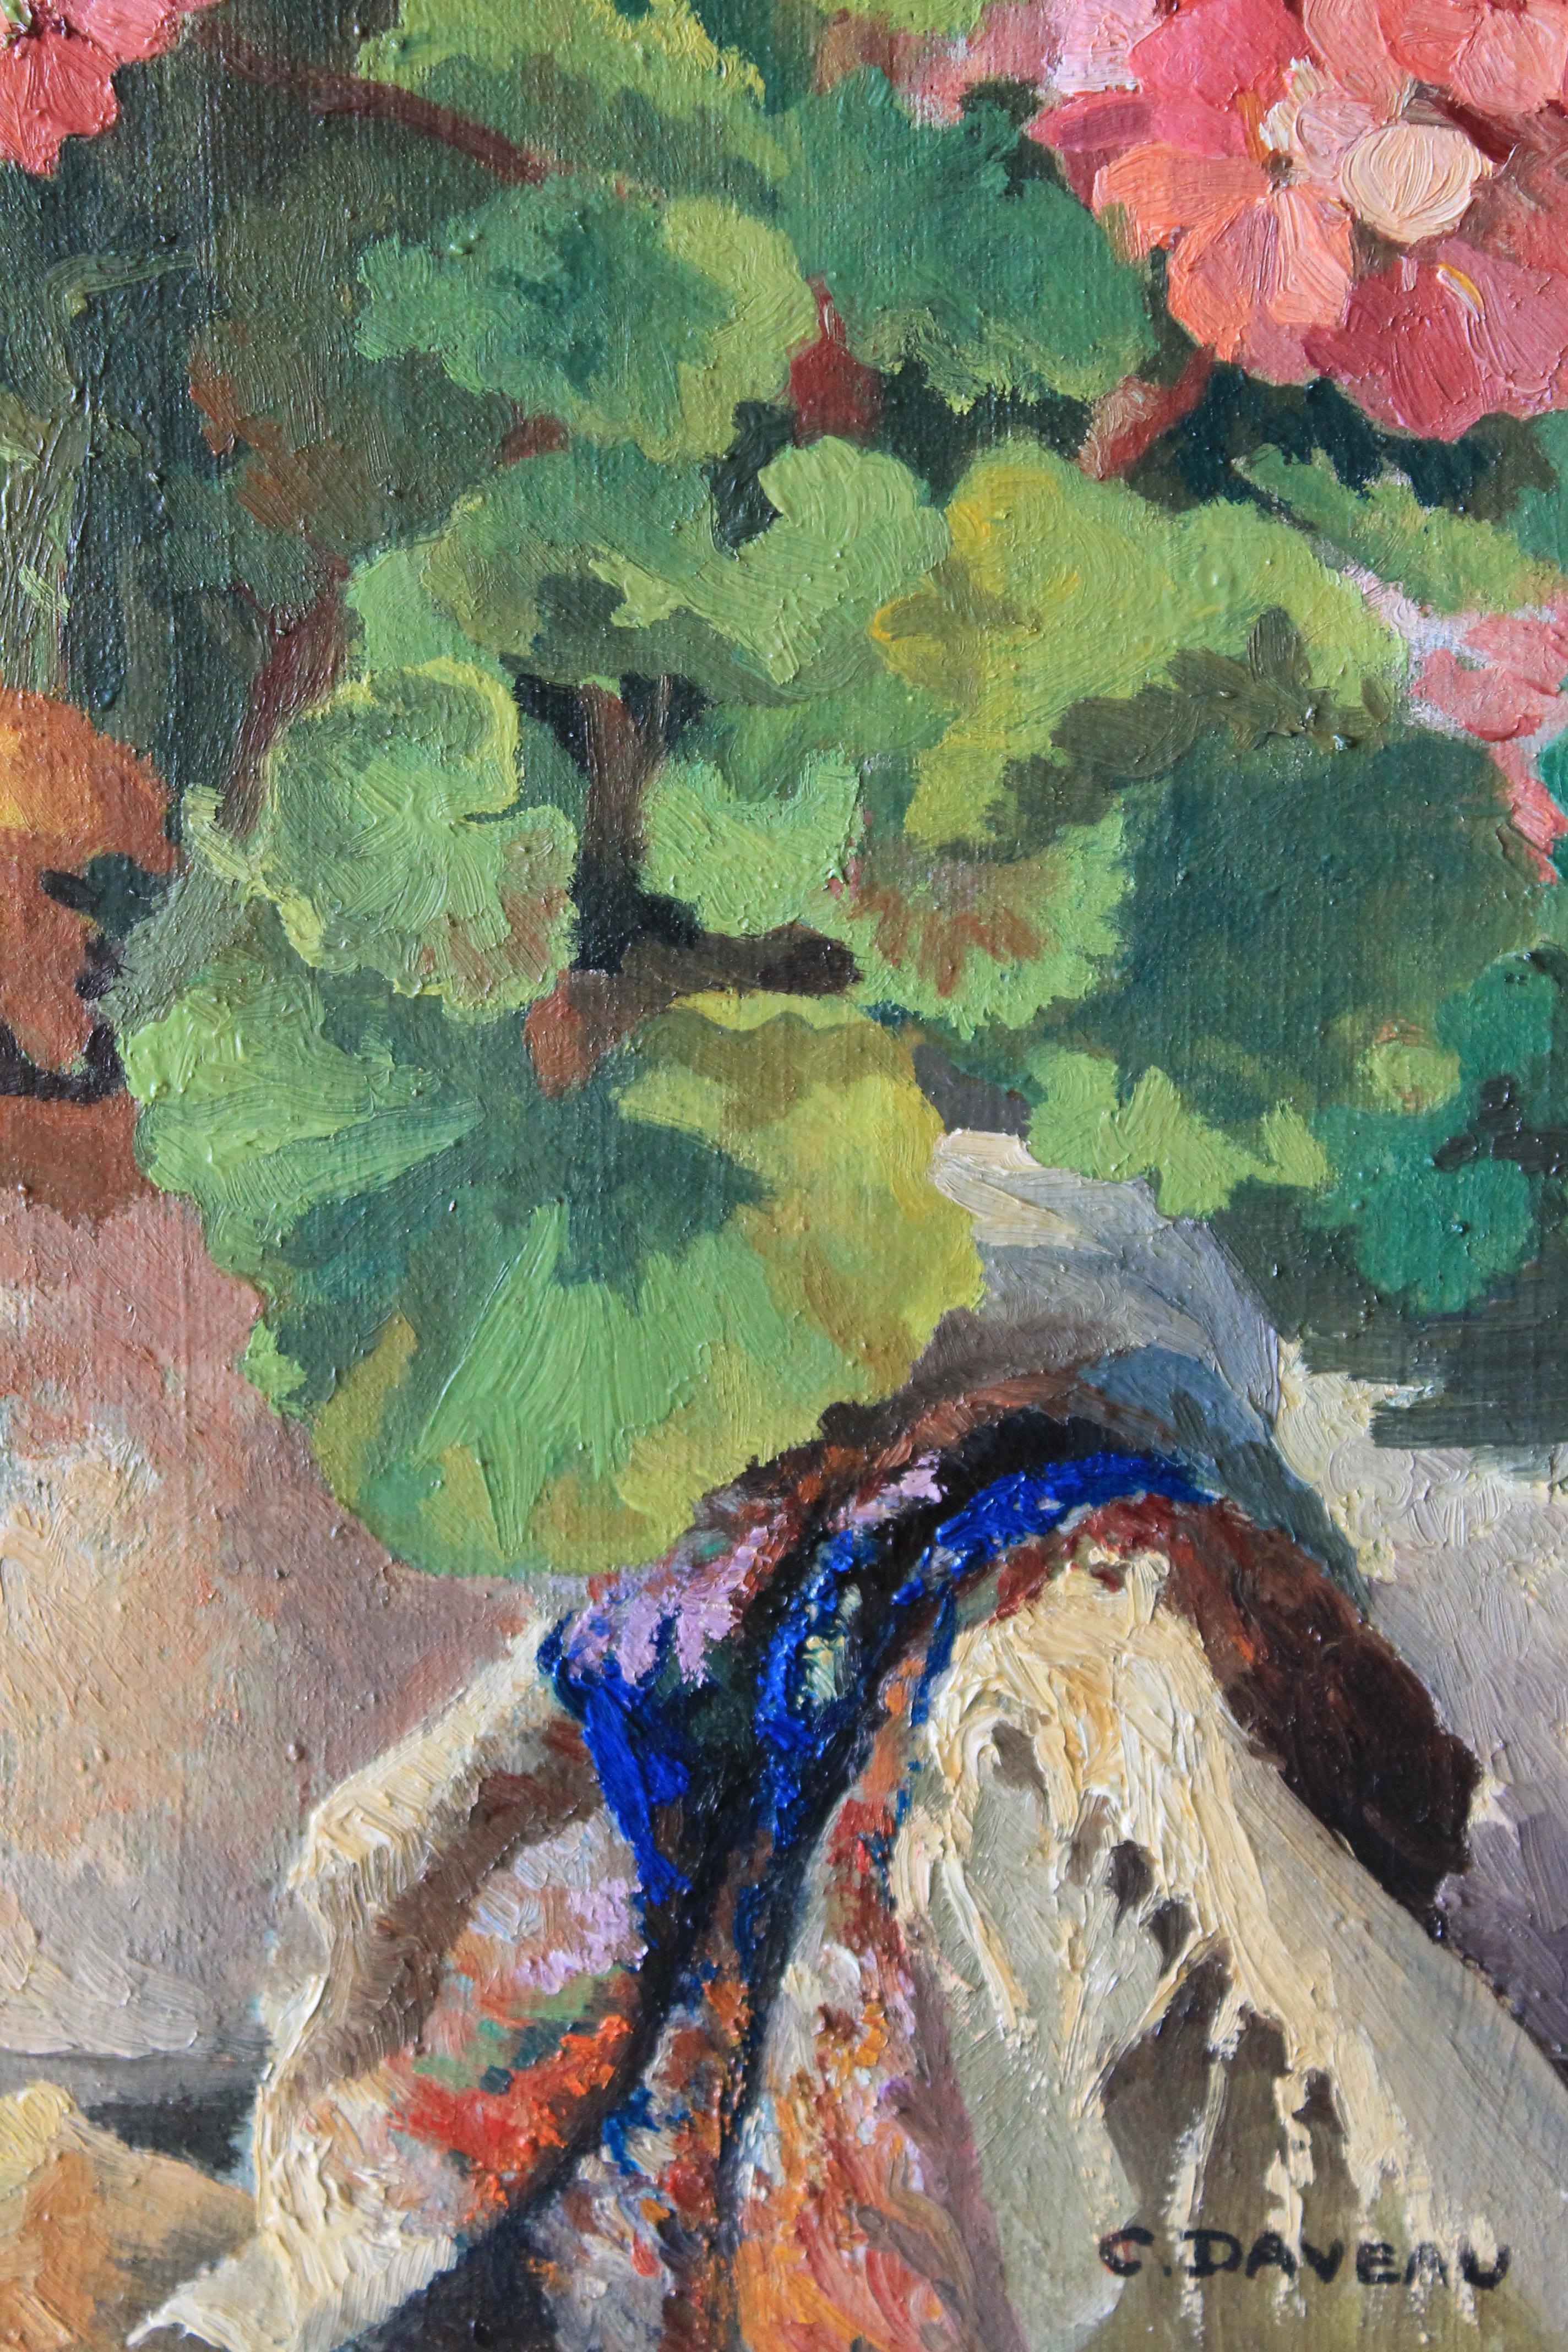 Vintage geranium oil painting, floral still life, flowers - Post-Impressionist Painting by c. daveau